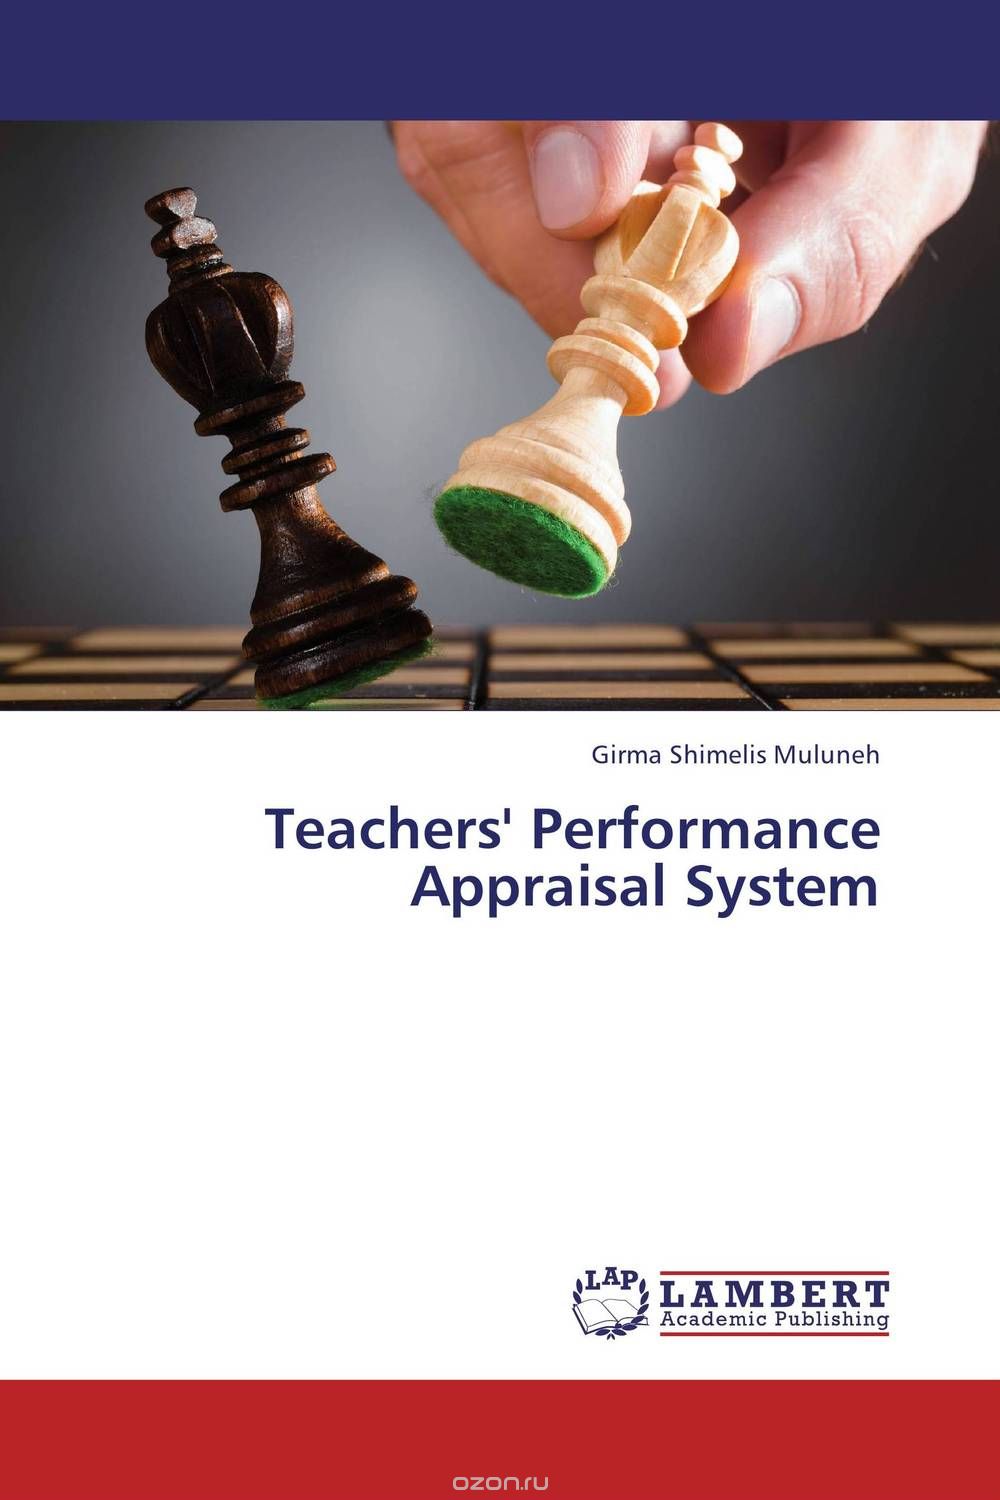 Скачать книгу "Teachers' Performance Appraisal System"